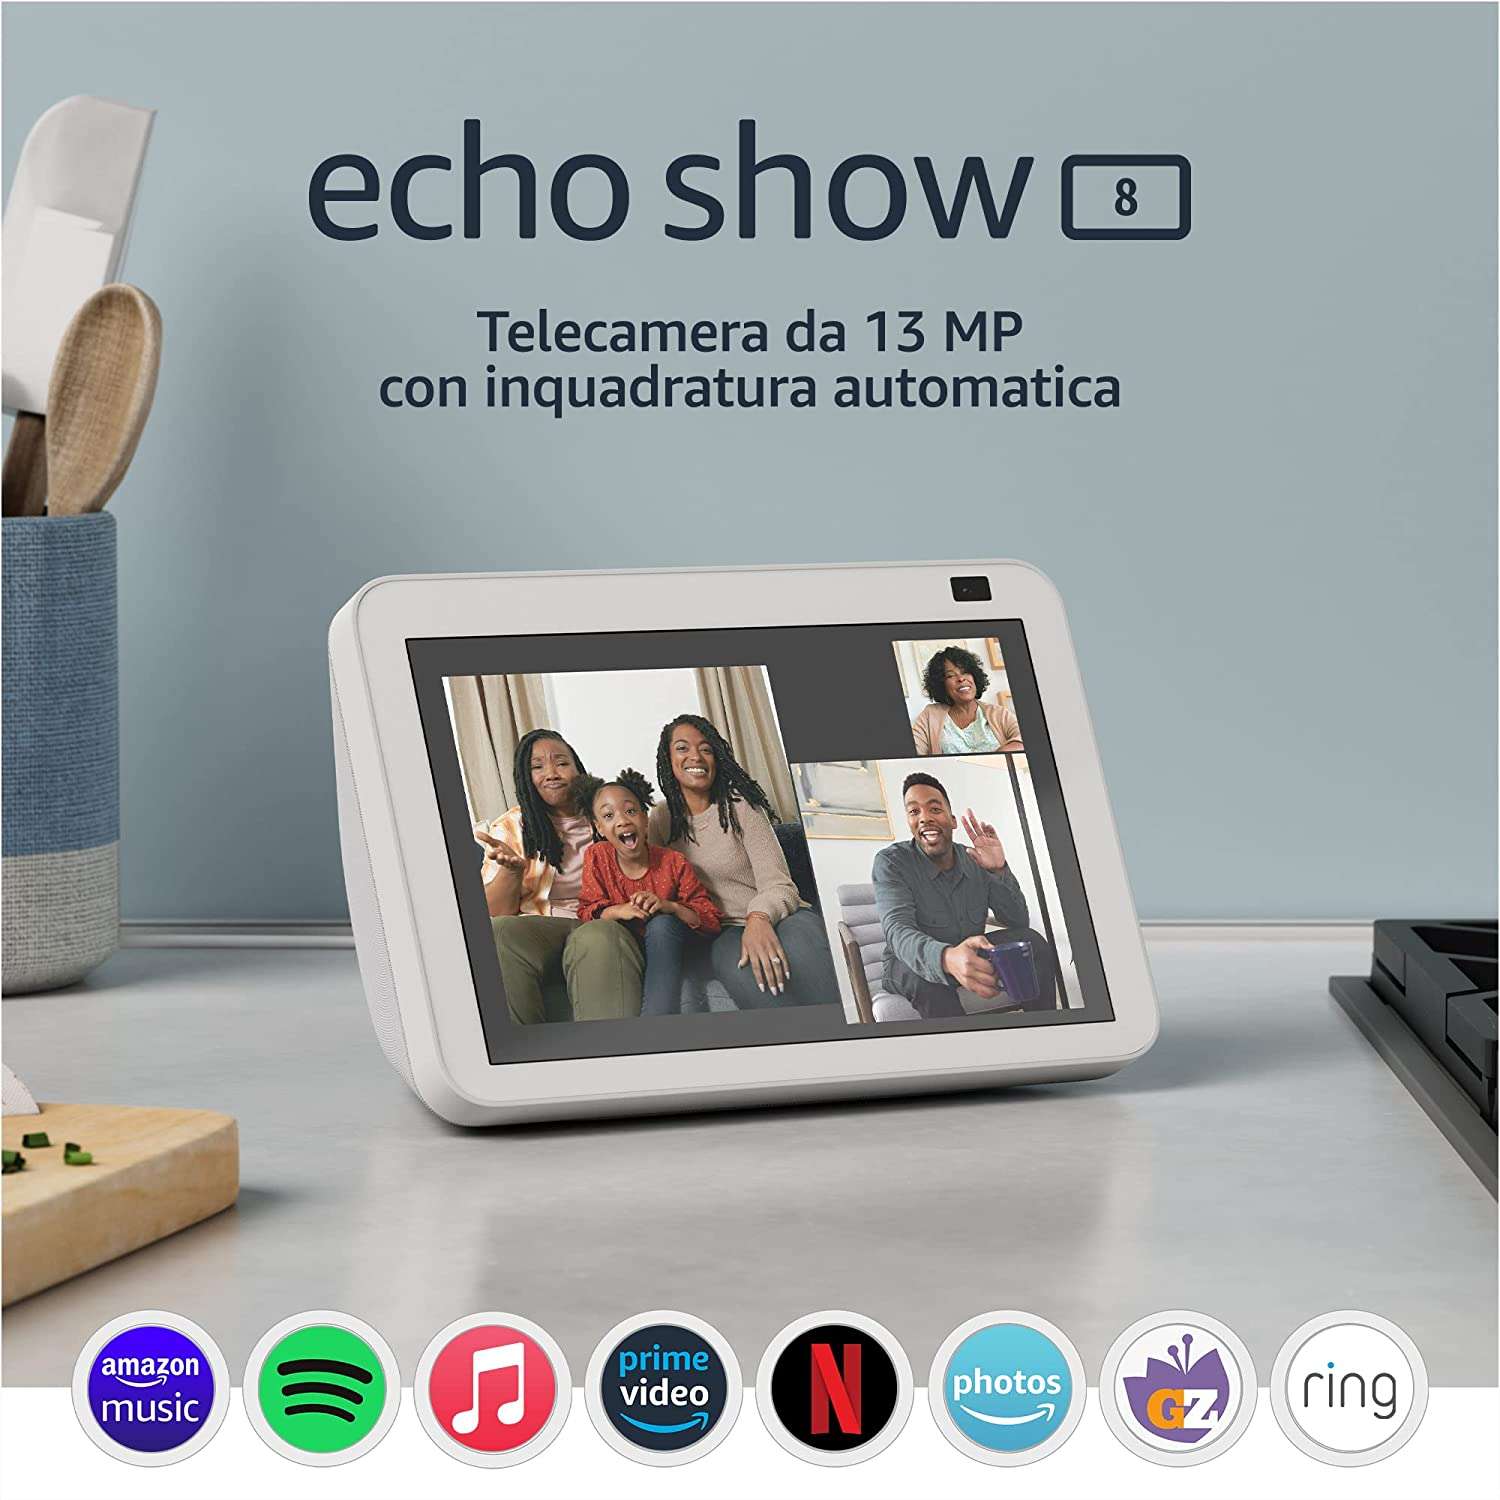 echo-show-8-prezzo-bomba-amazon-schermo